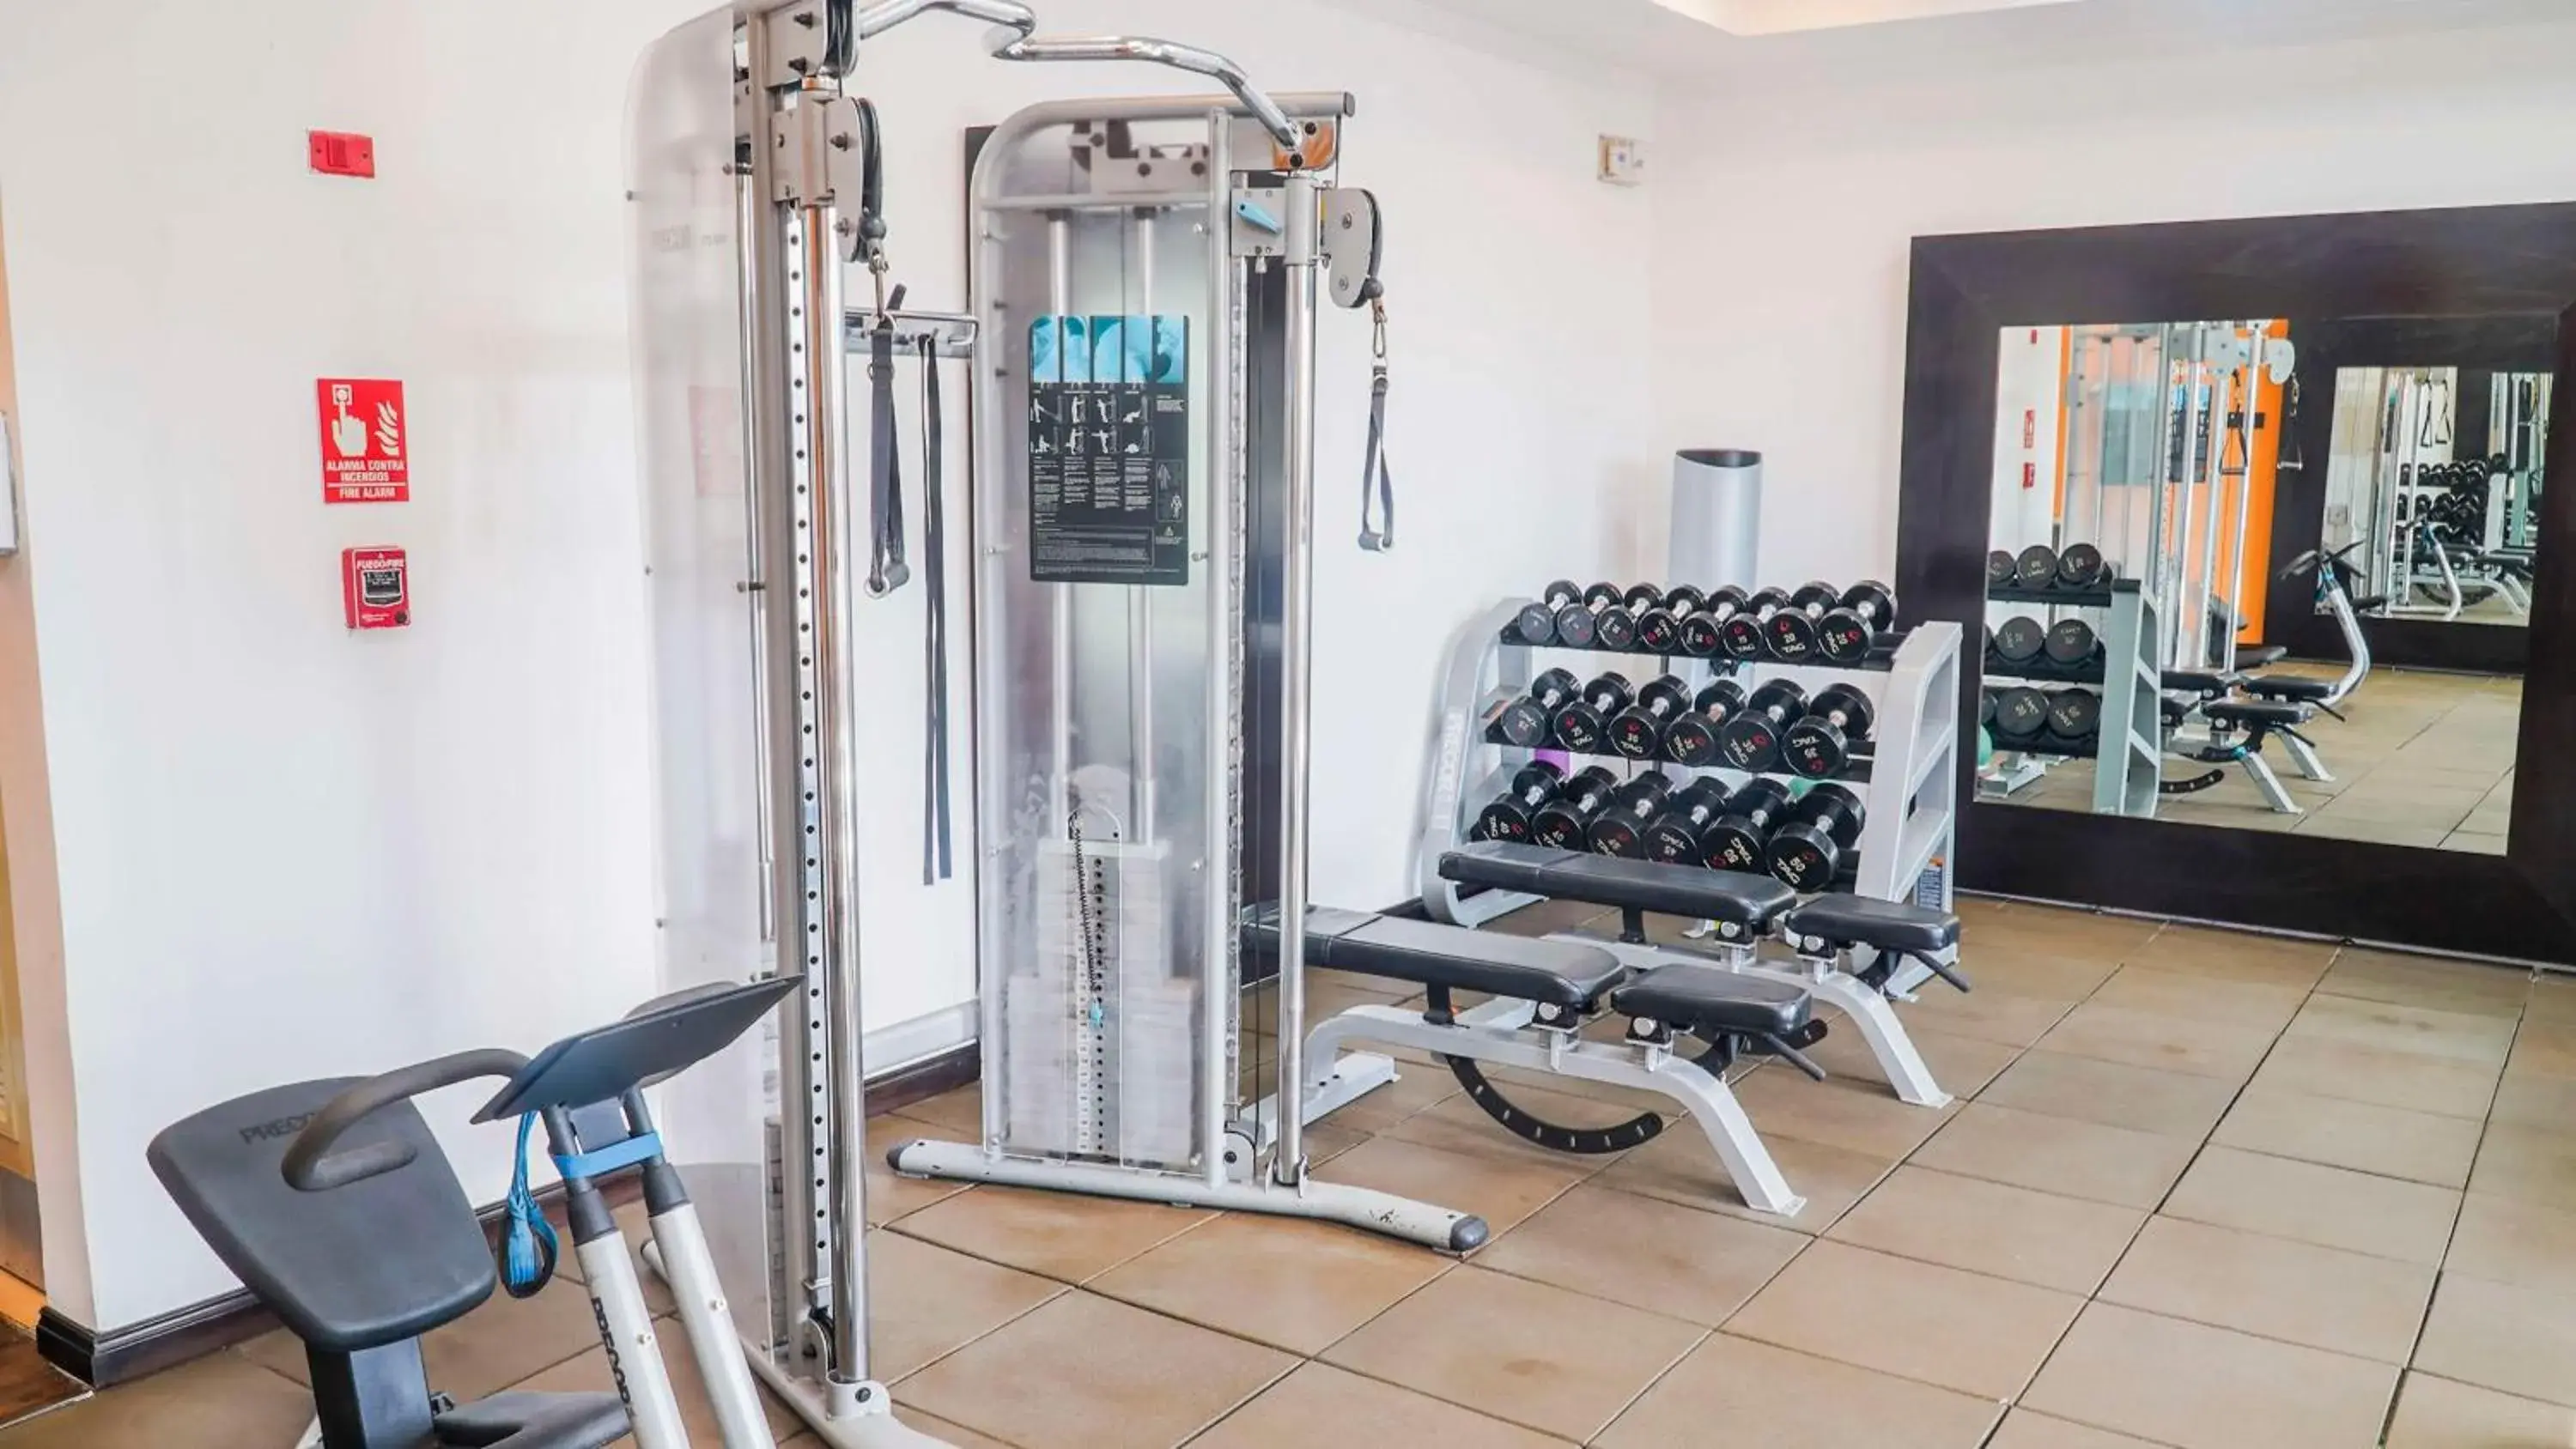 Fitness centre/facilities, Fitness Center/Facilities in Hilton Garden Inn Panama